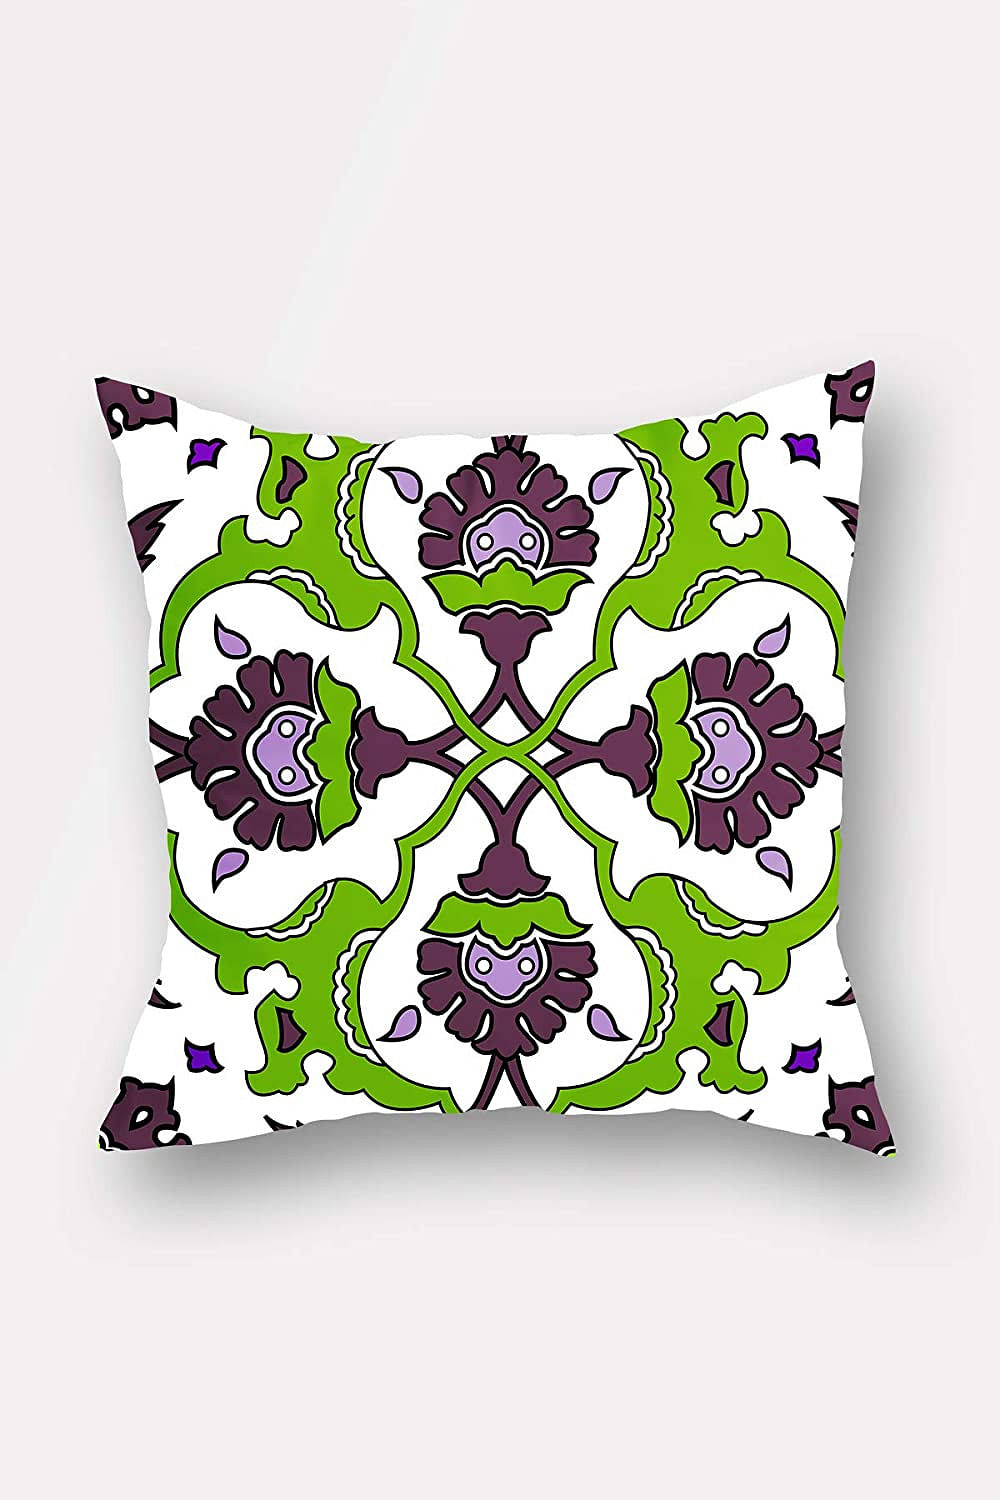 Bonamaison Decorative Throw Pillow Cover, Multi-Colour, 45 x 45 cm, BNMYST1899